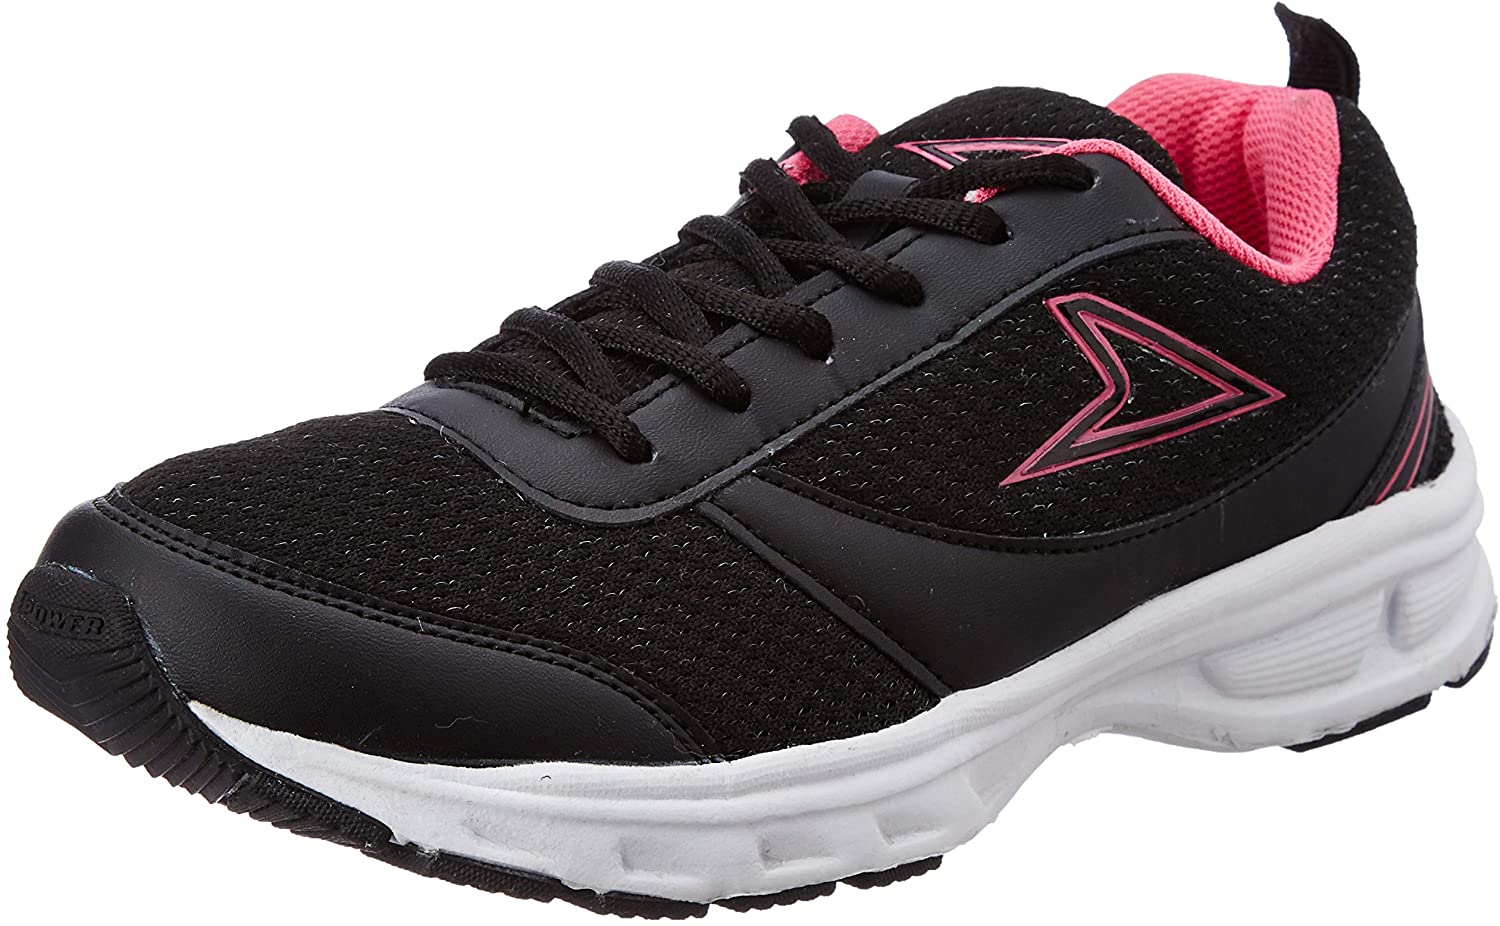 Power Women's Might Pink Running Shoes-8 UK (41 EU) (10.5 US) (5395002)